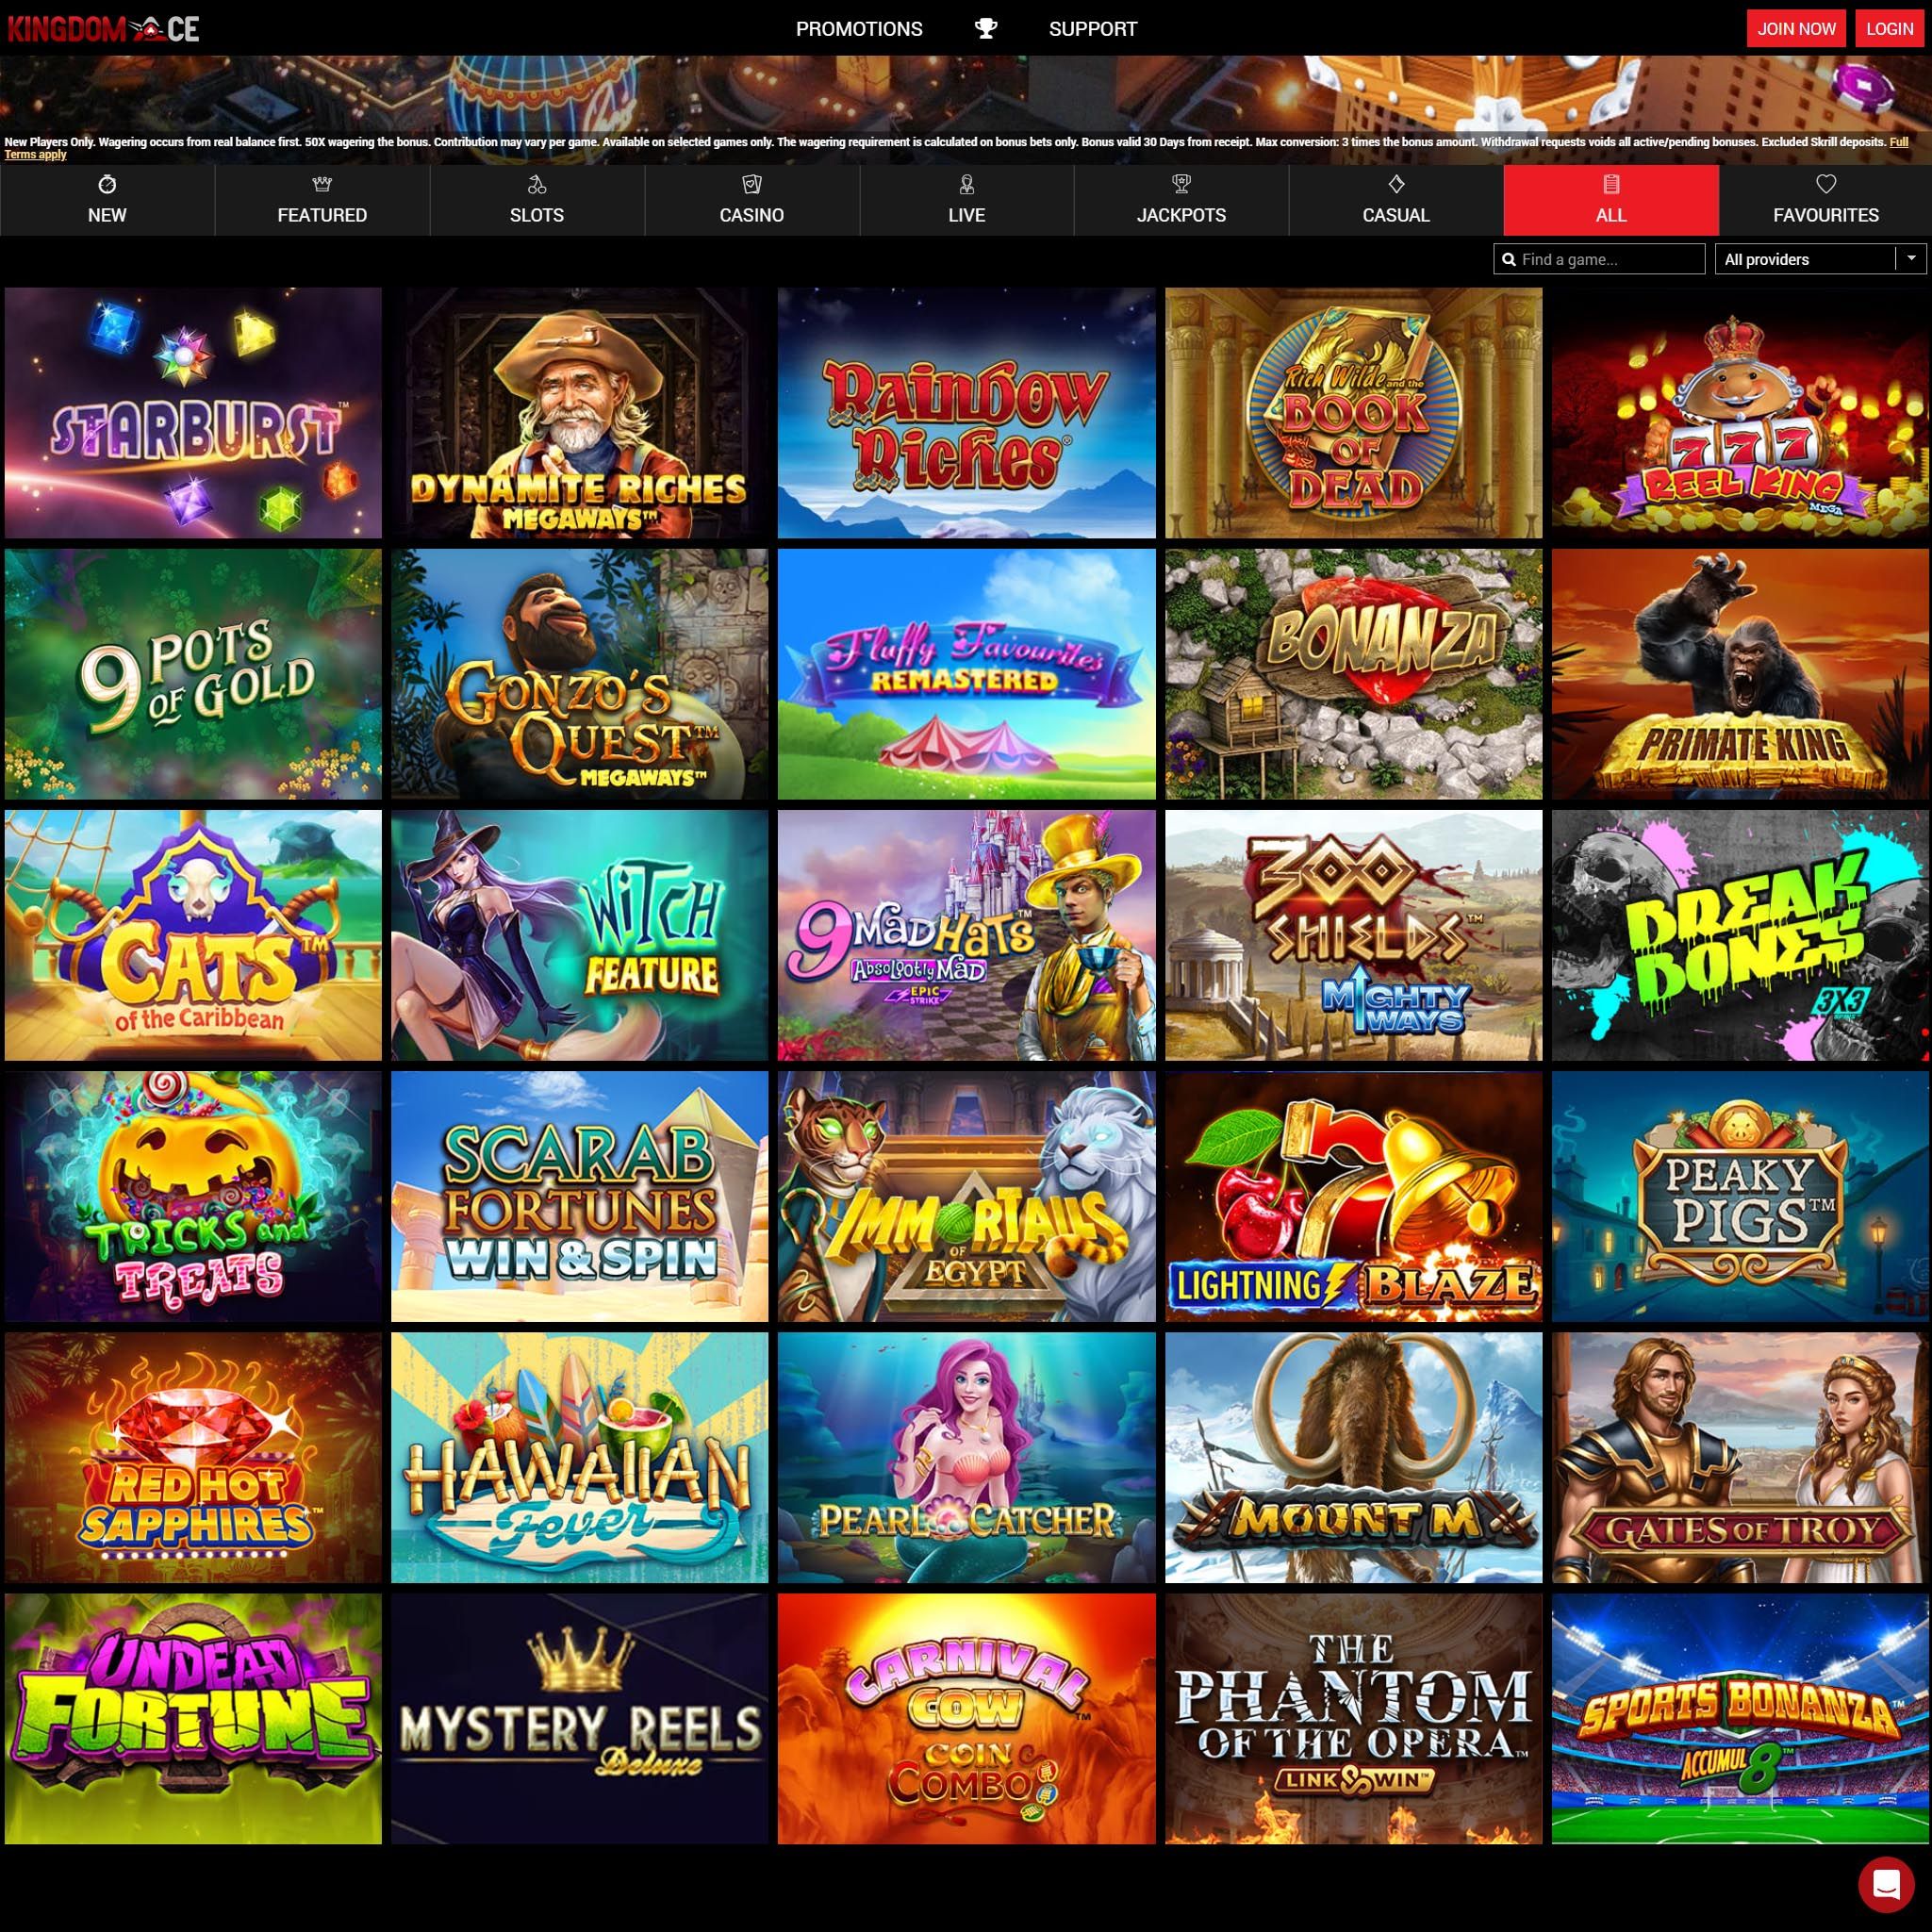 KingdomAce Casino UK review by Mr. Gamble